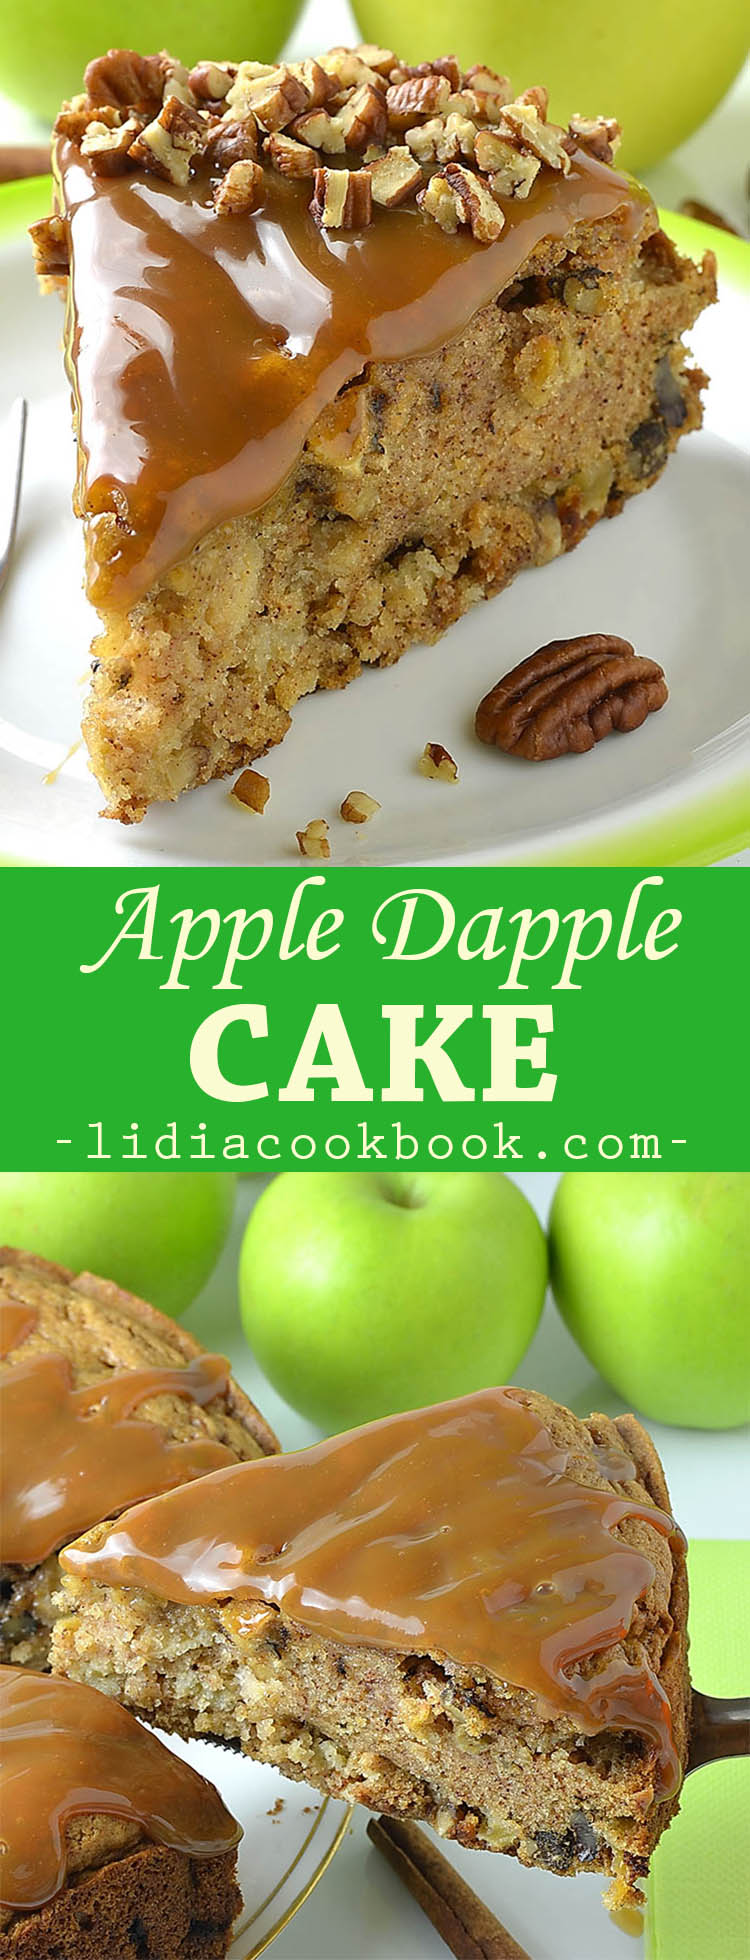 Apple Dapple Cake - Lidia's Cookbook